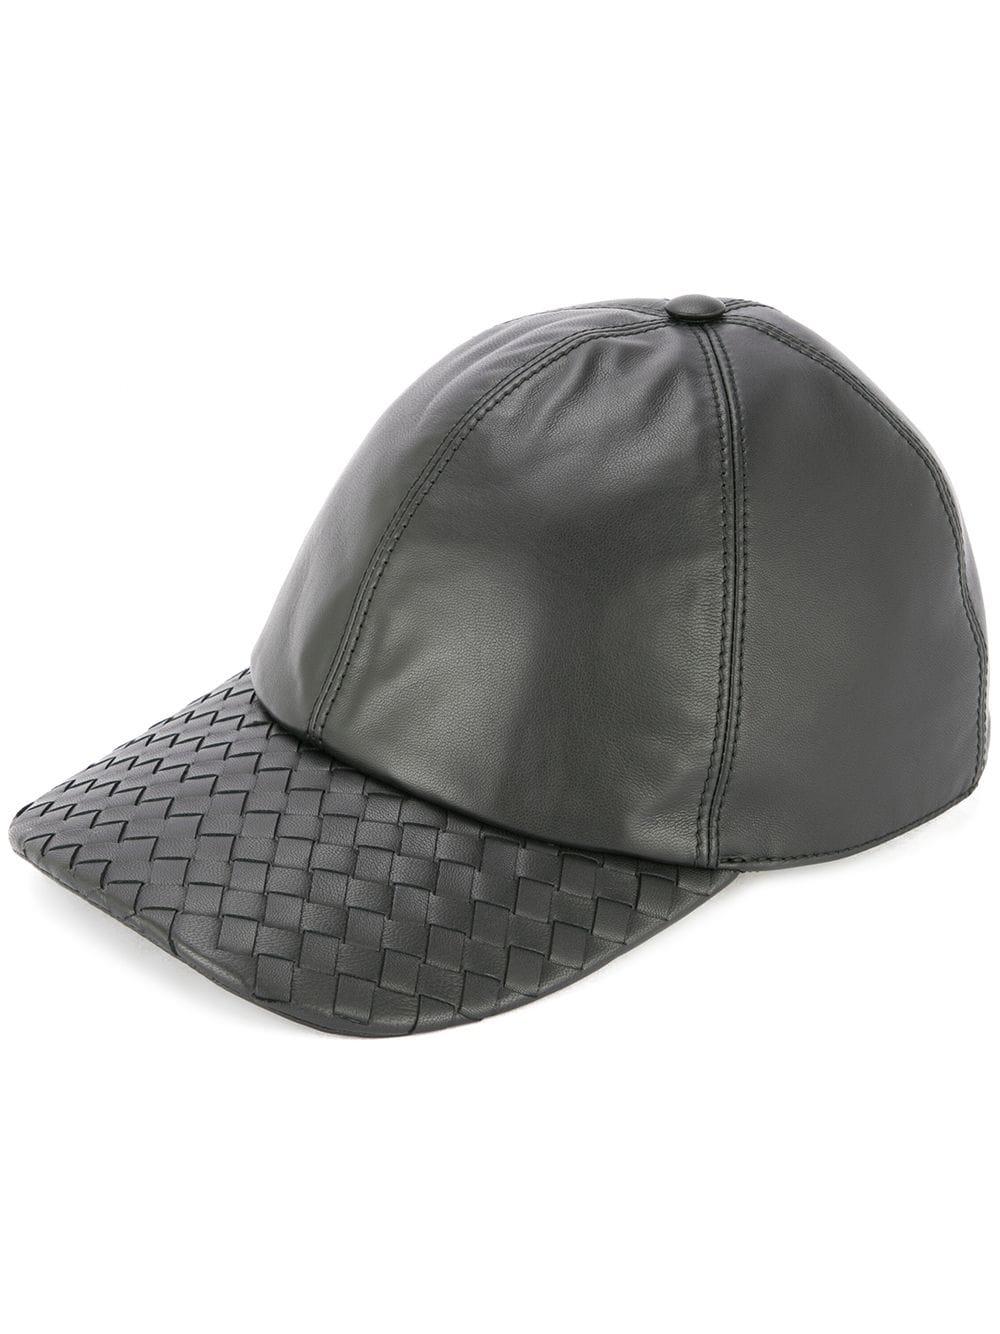 Bottega Veneta Leather Cap in Black for Men | Lyst